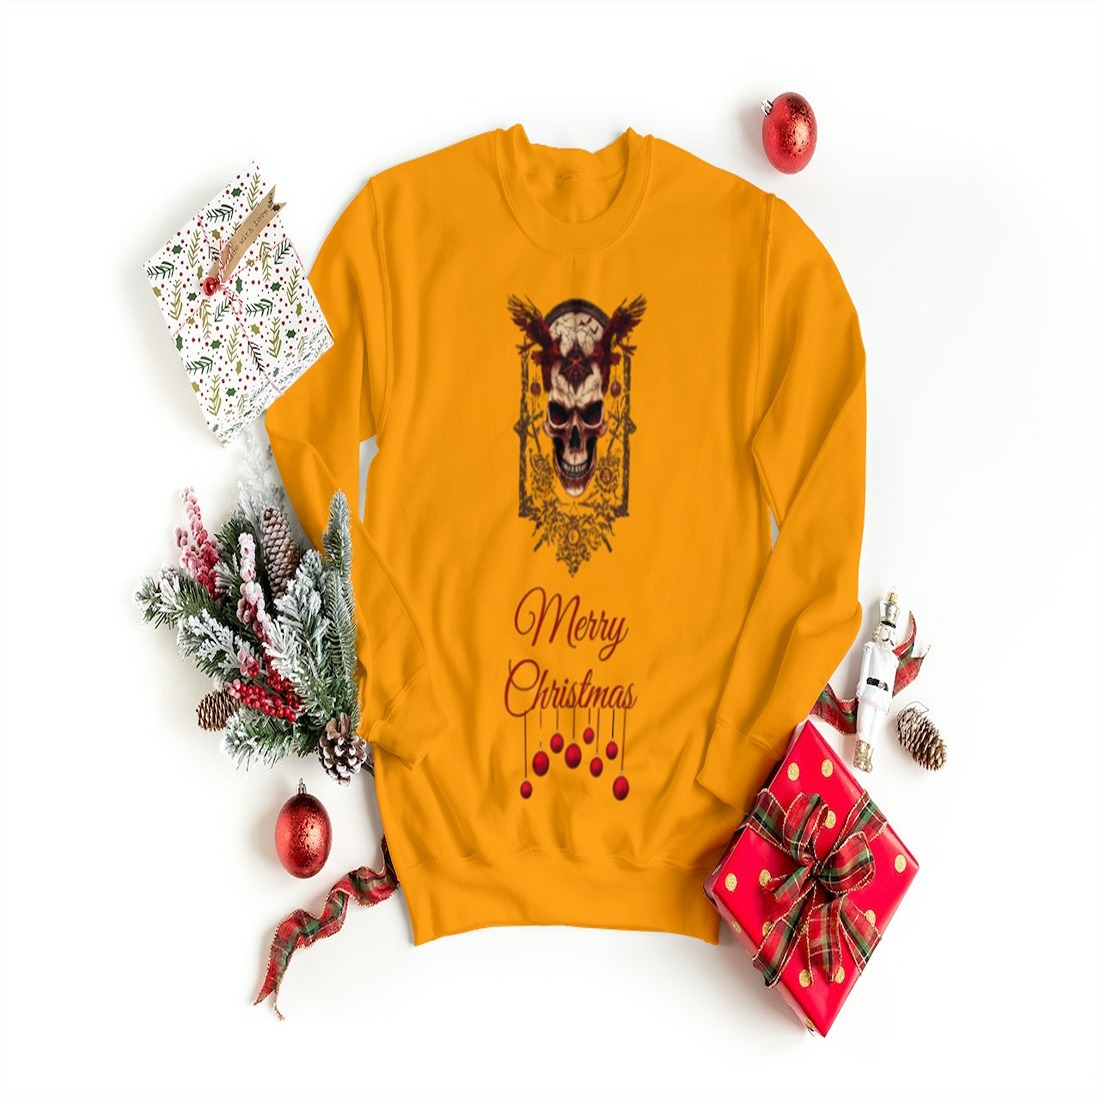 Merry Christmas - Skulls T-shirt Design Template preview image.